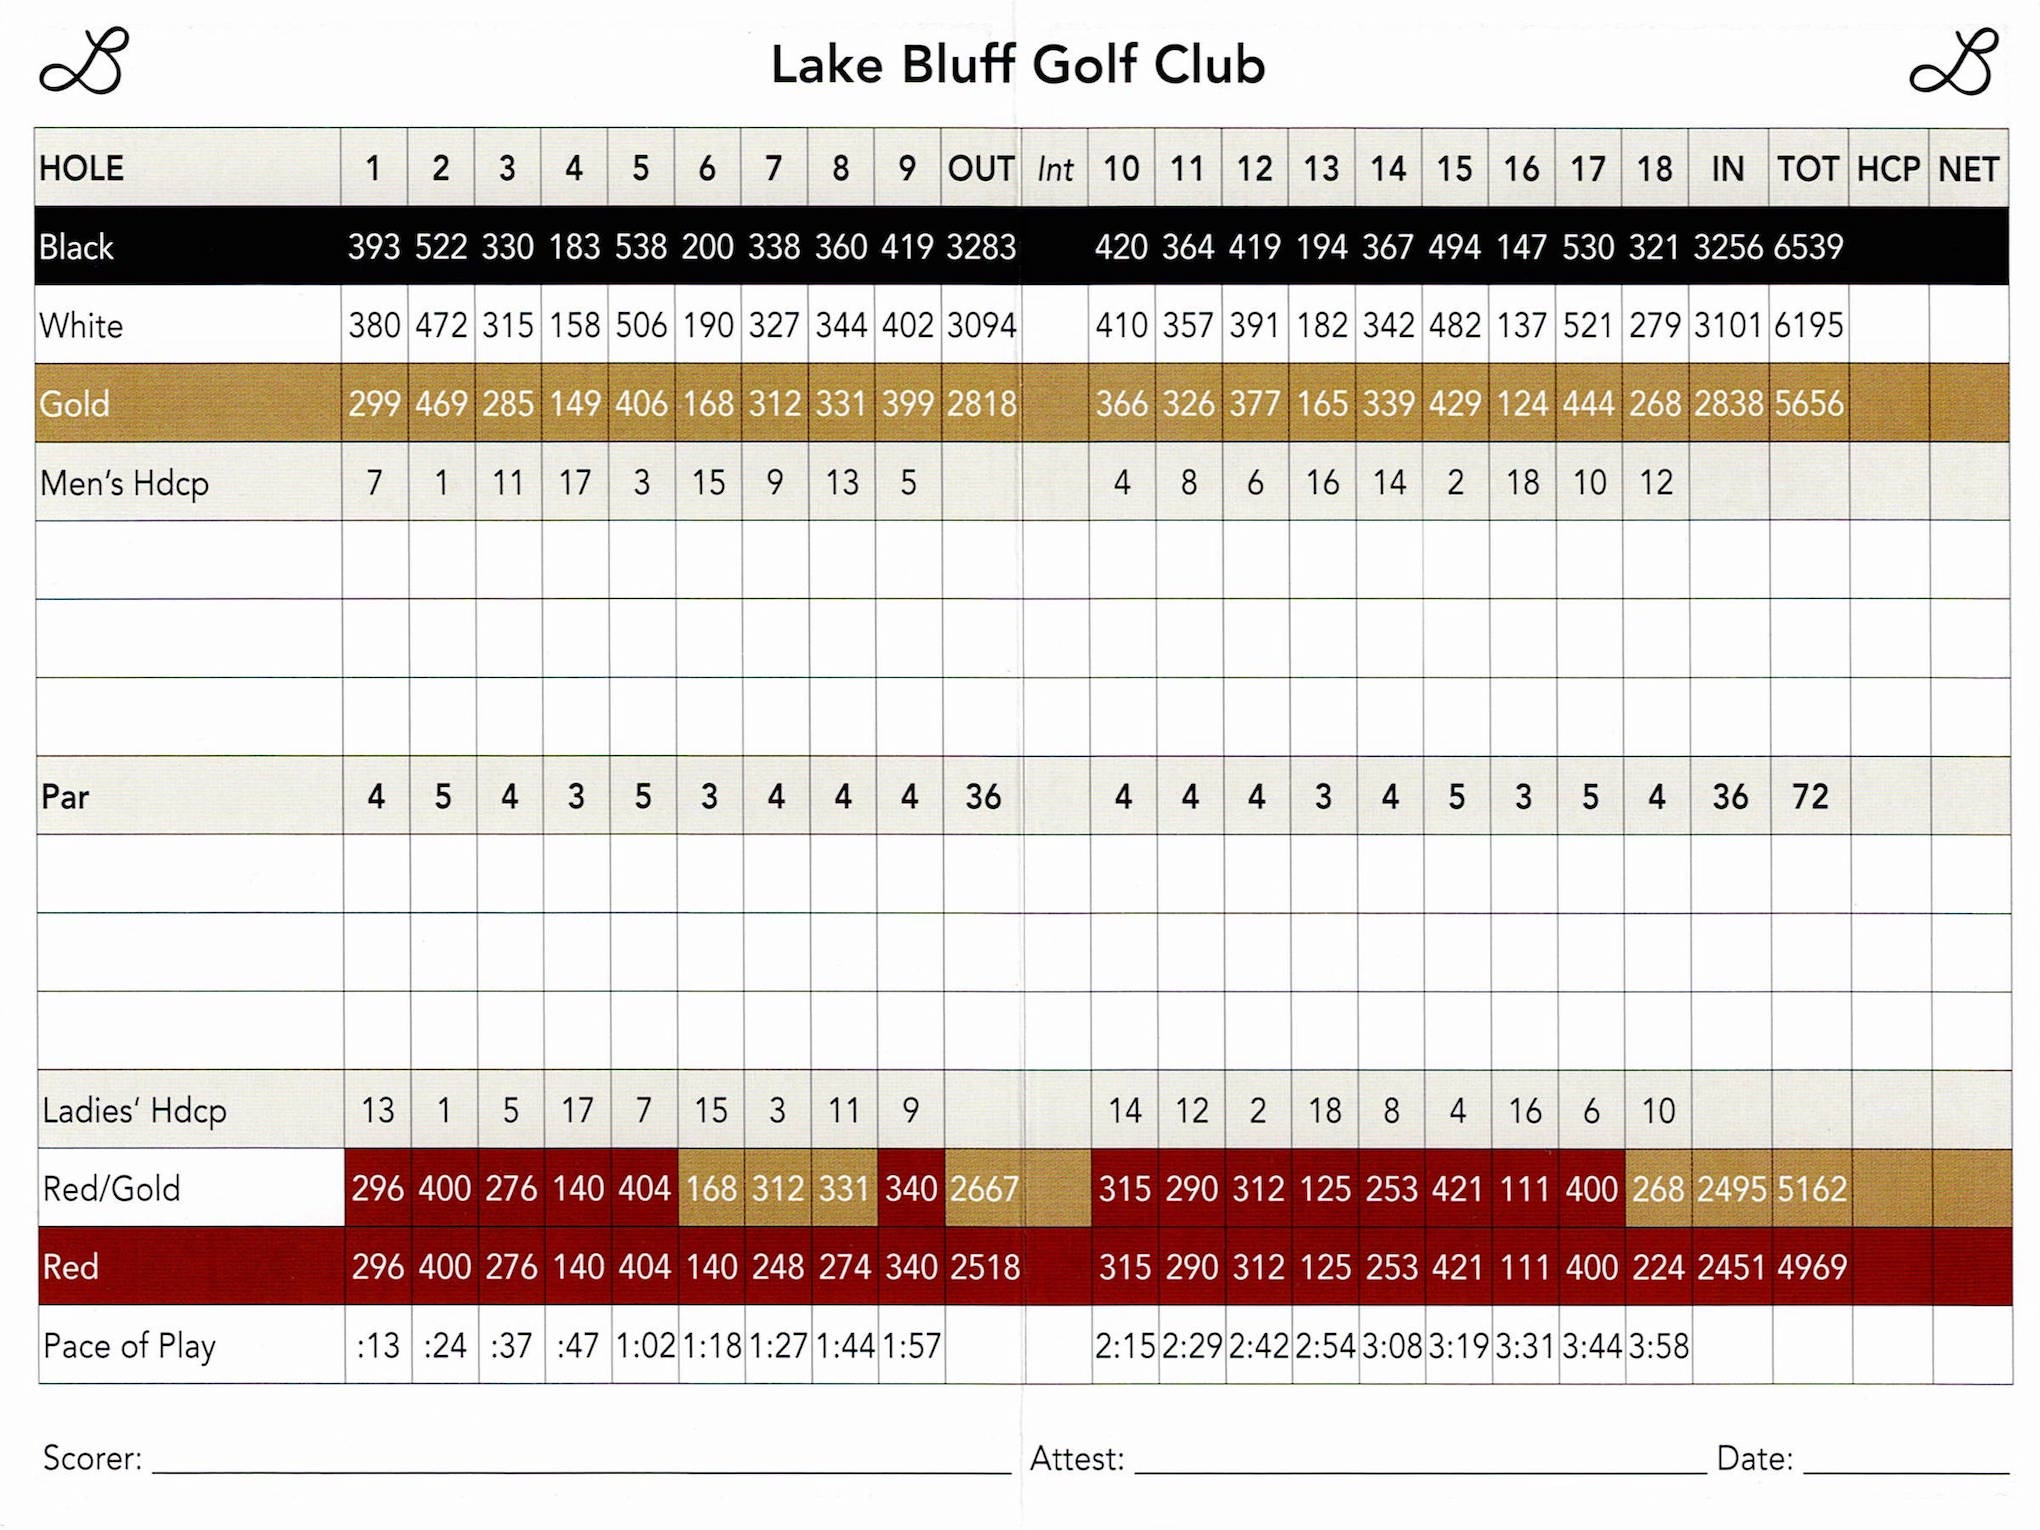 Scan of the scorecard from Lake Bluff Golf Club in Lake Bluff, Illinois. 